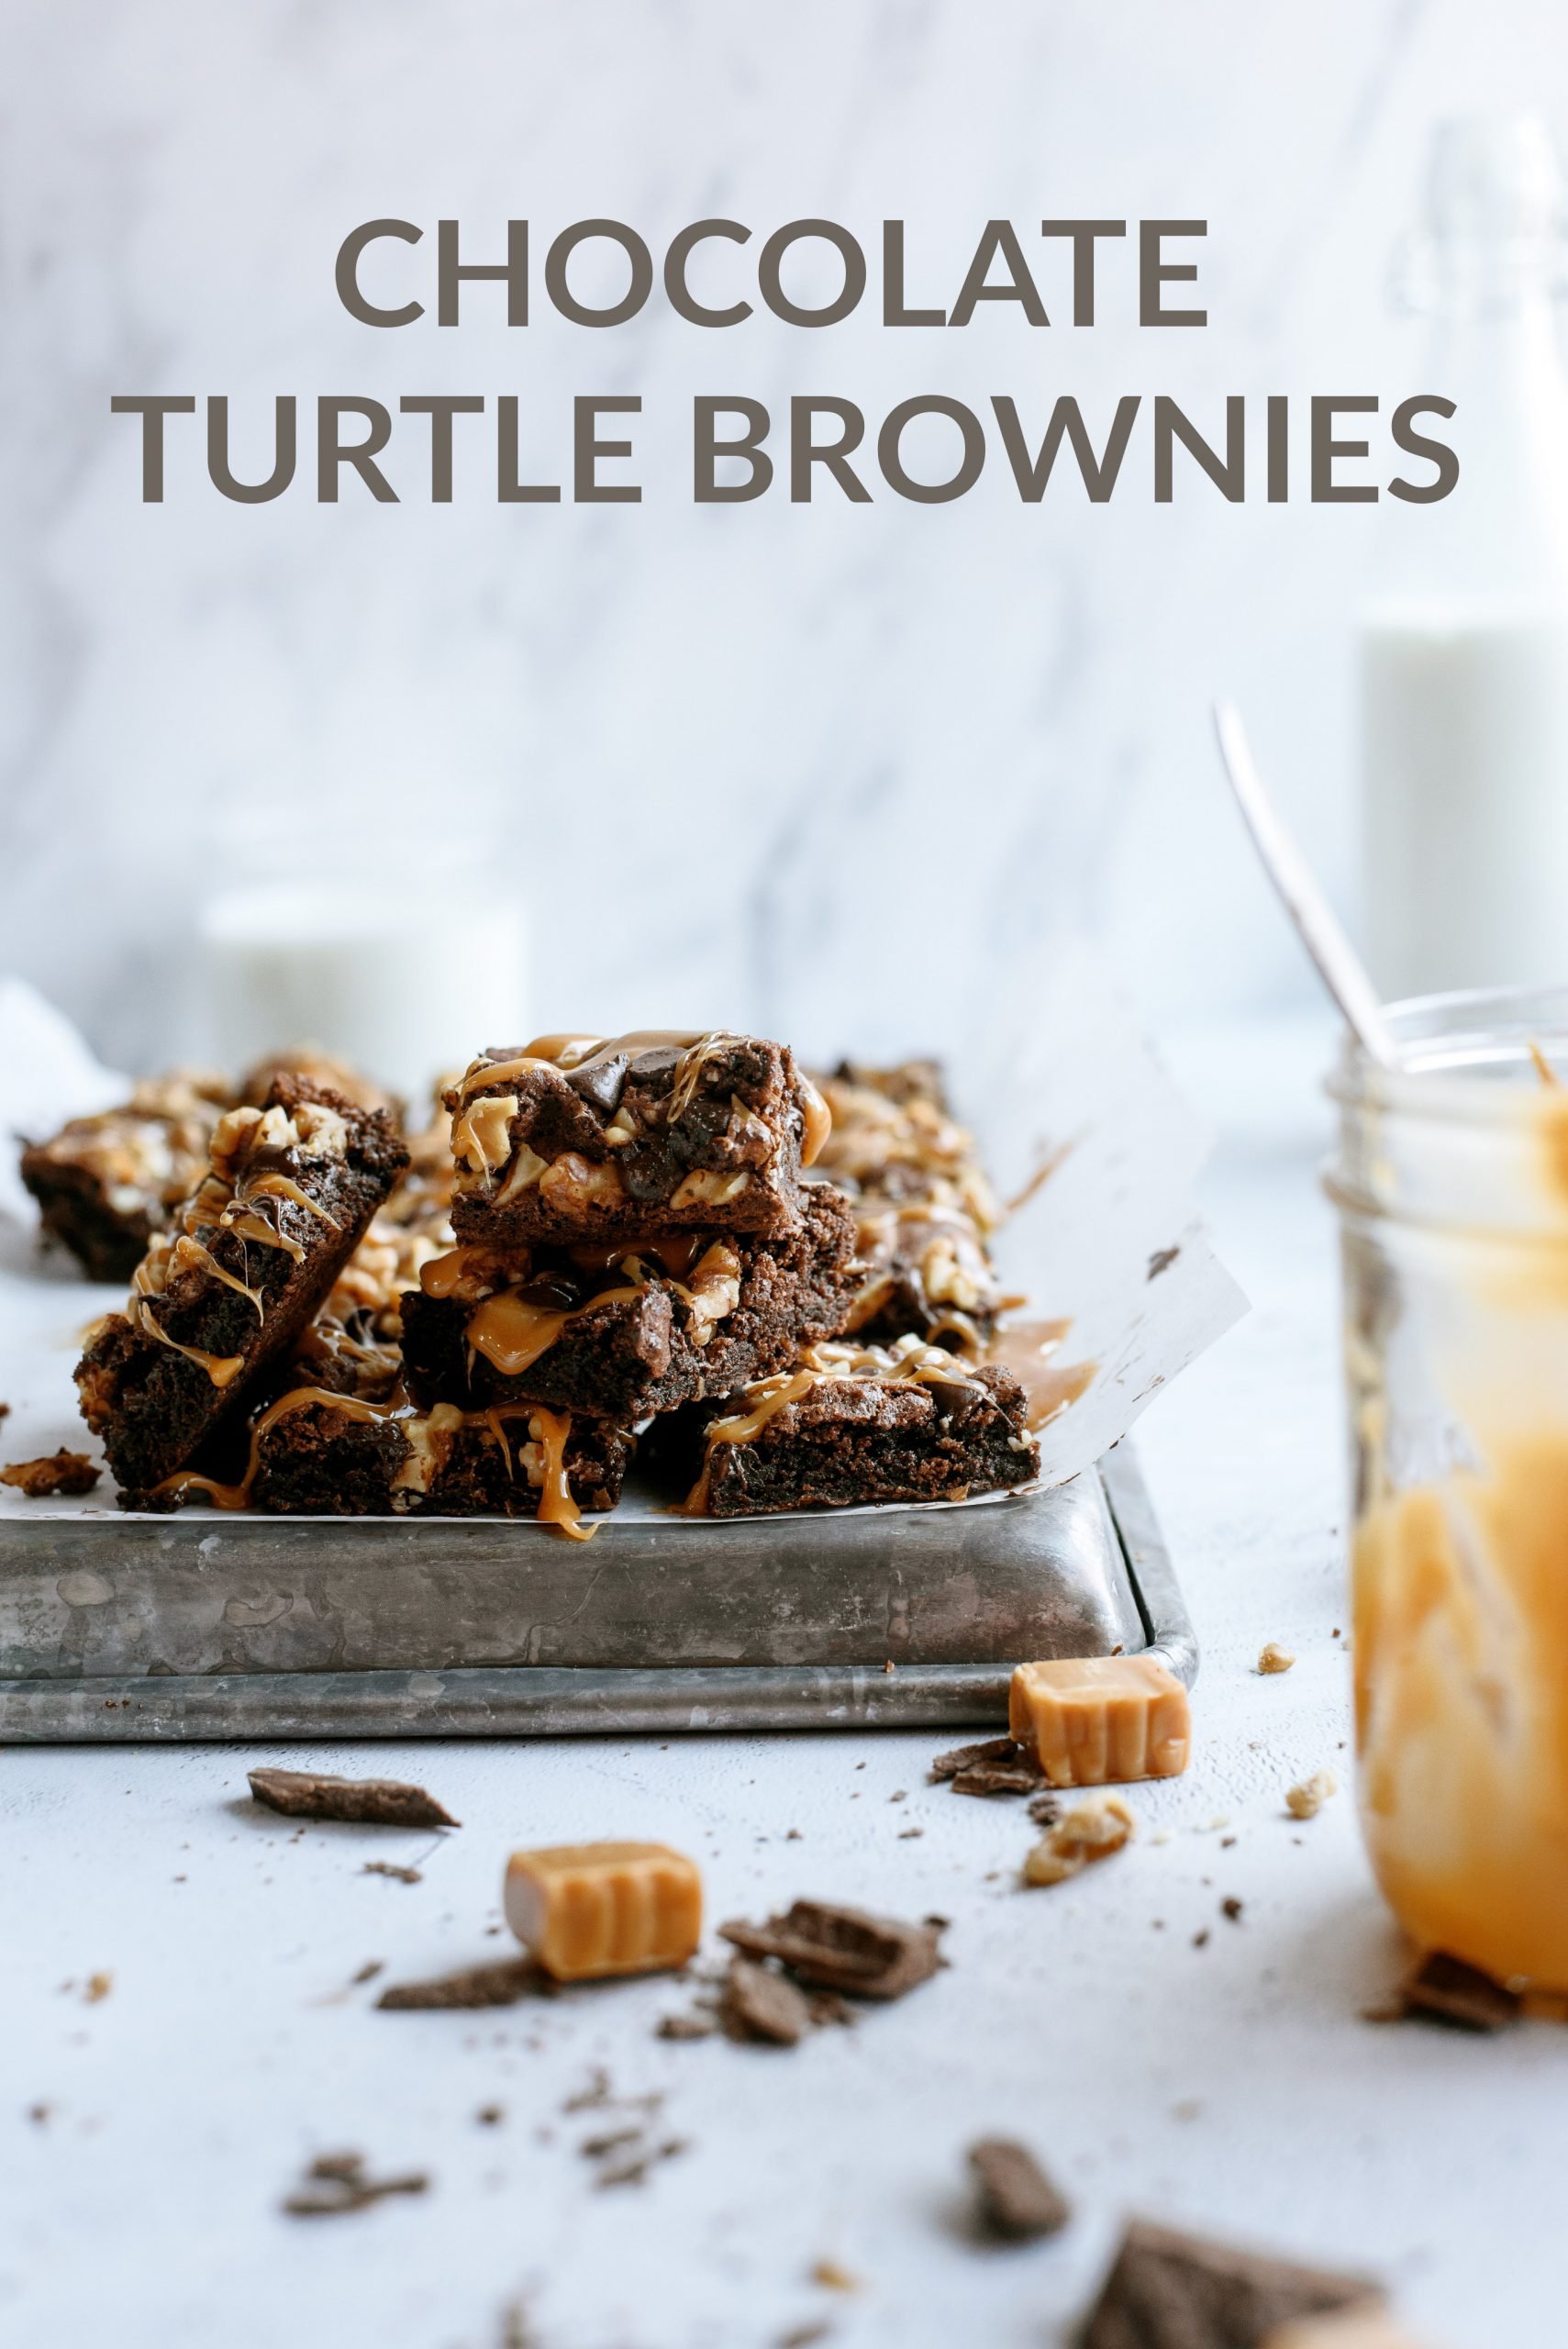 Chocolate Turtle Brownies Recipe
